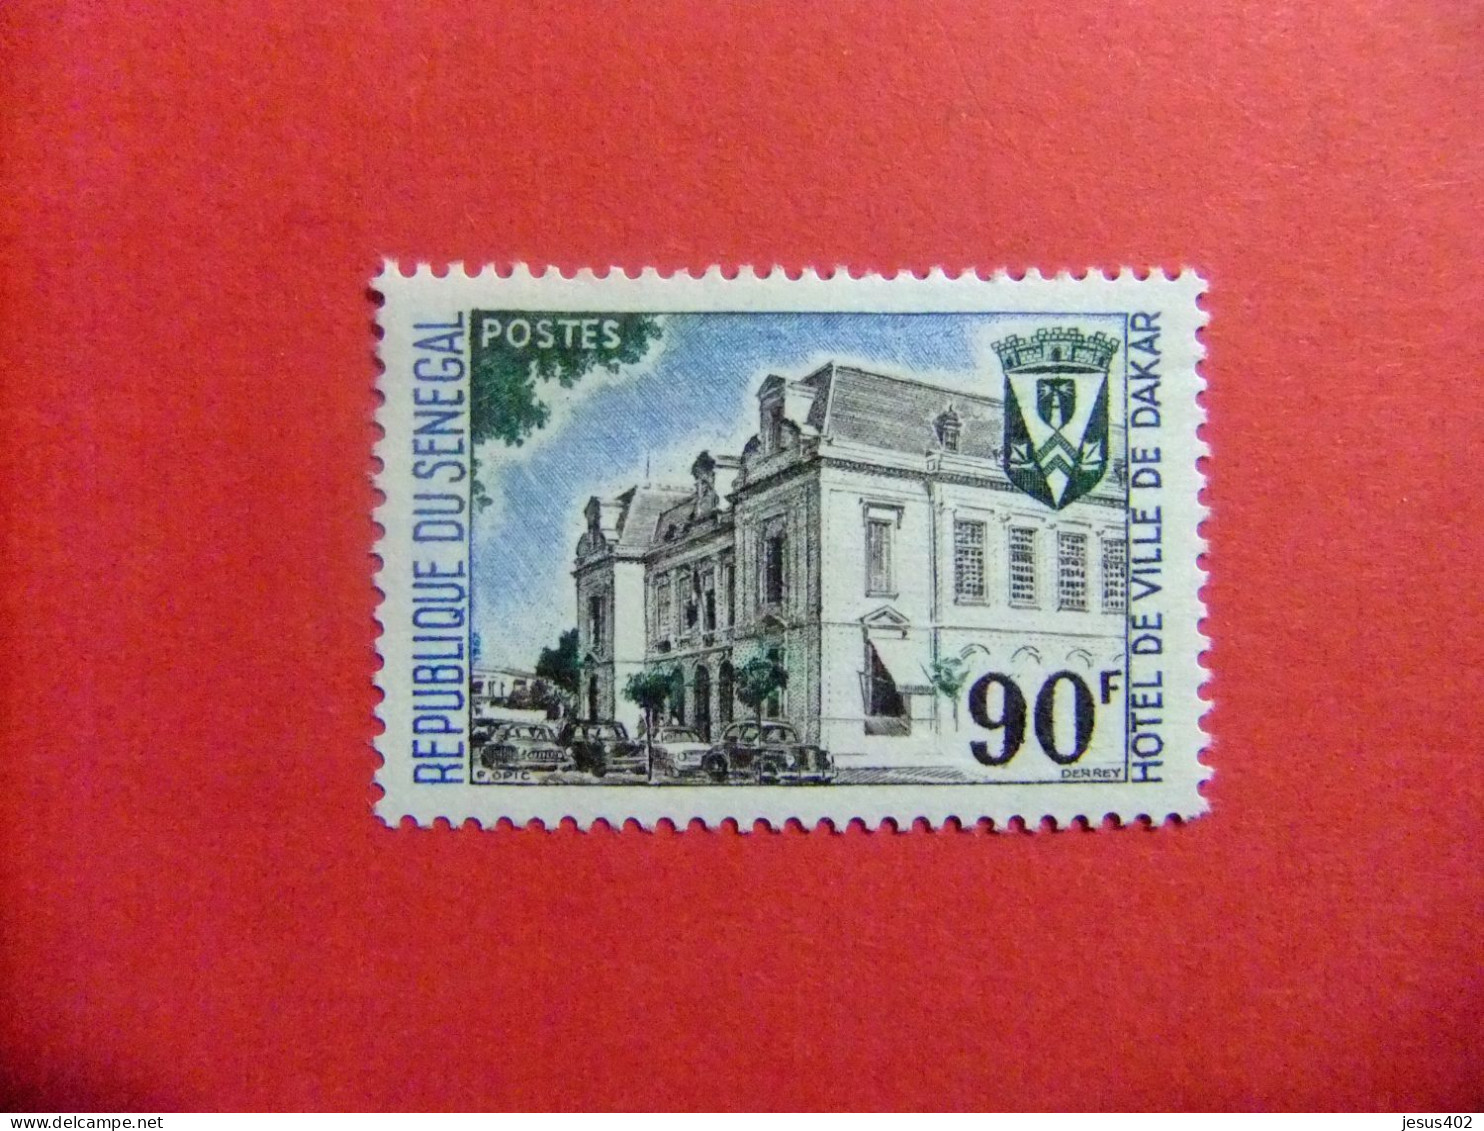 55 REPUBLICA SENEGAL 1967 / AYUNTAMIENTO En DAKAR  / YVERT 294 MNH - Sénégal (1960-...)